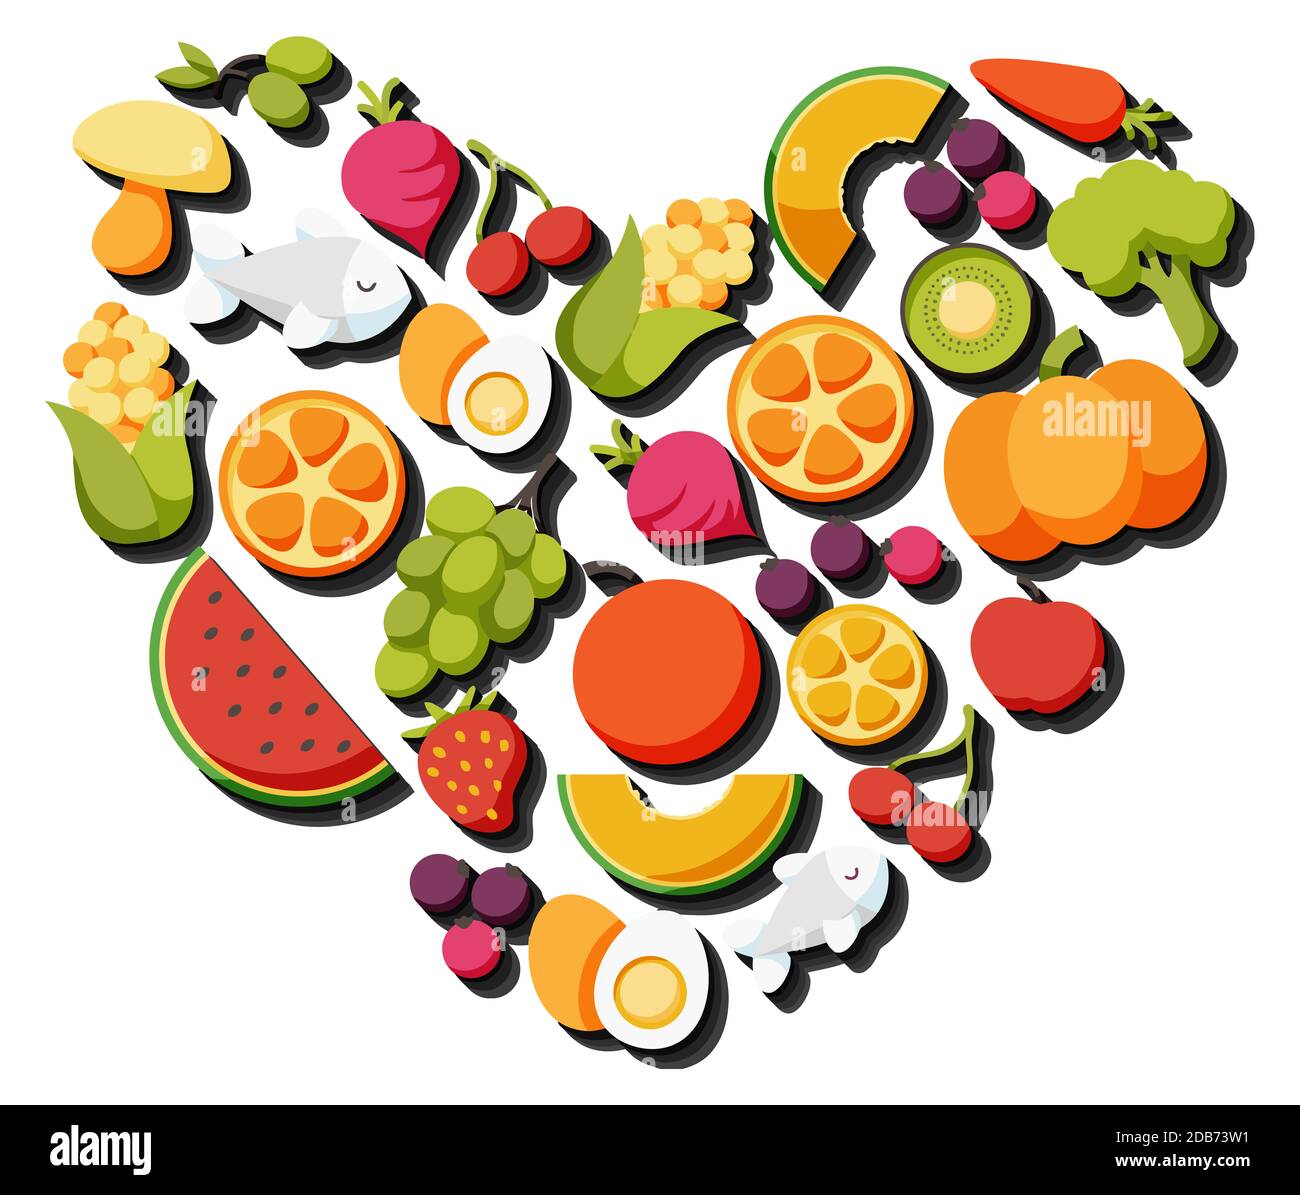 healthy food heart shape illustration Stock Photo